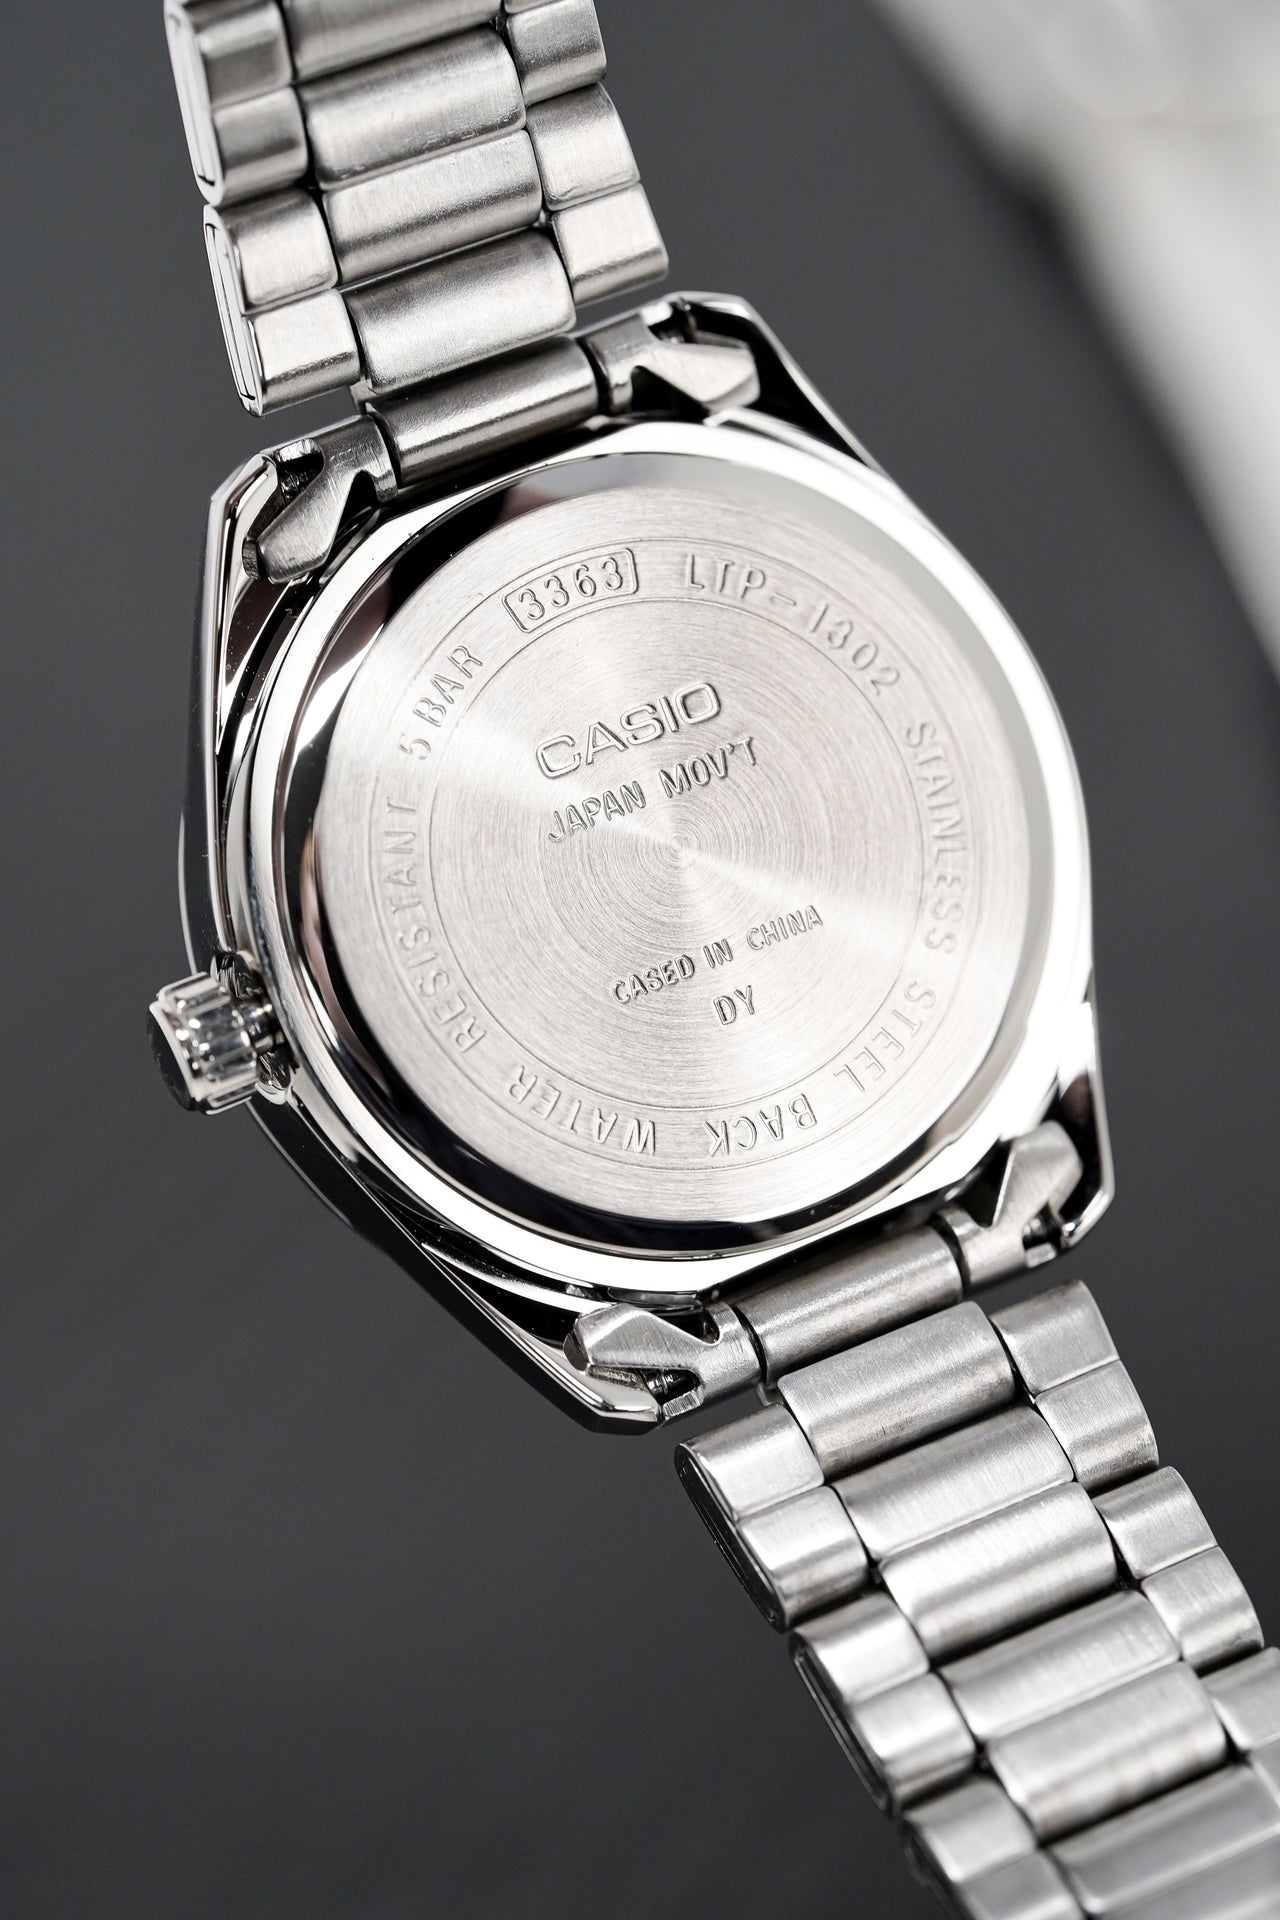 Casio Women's Watch Stainless Steel Gold LTP-1302D-1A2VDF